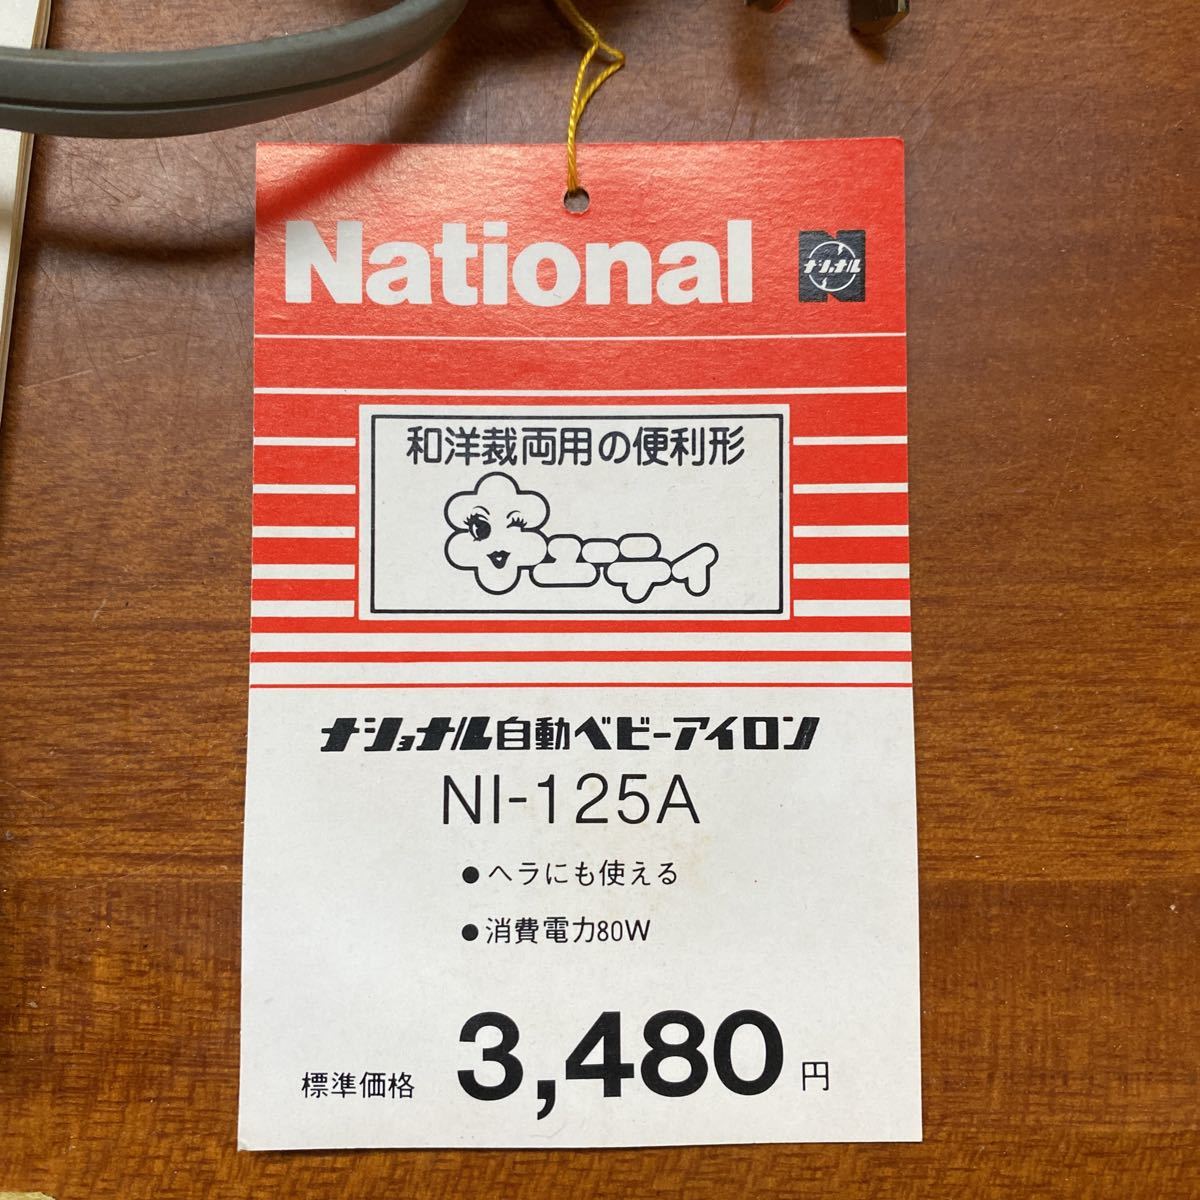 National 自動 ベビーアイロン ナショナル NI-125A 80W 定価3,480円 昭和レトロ キューティ 当時物 新品の画像7